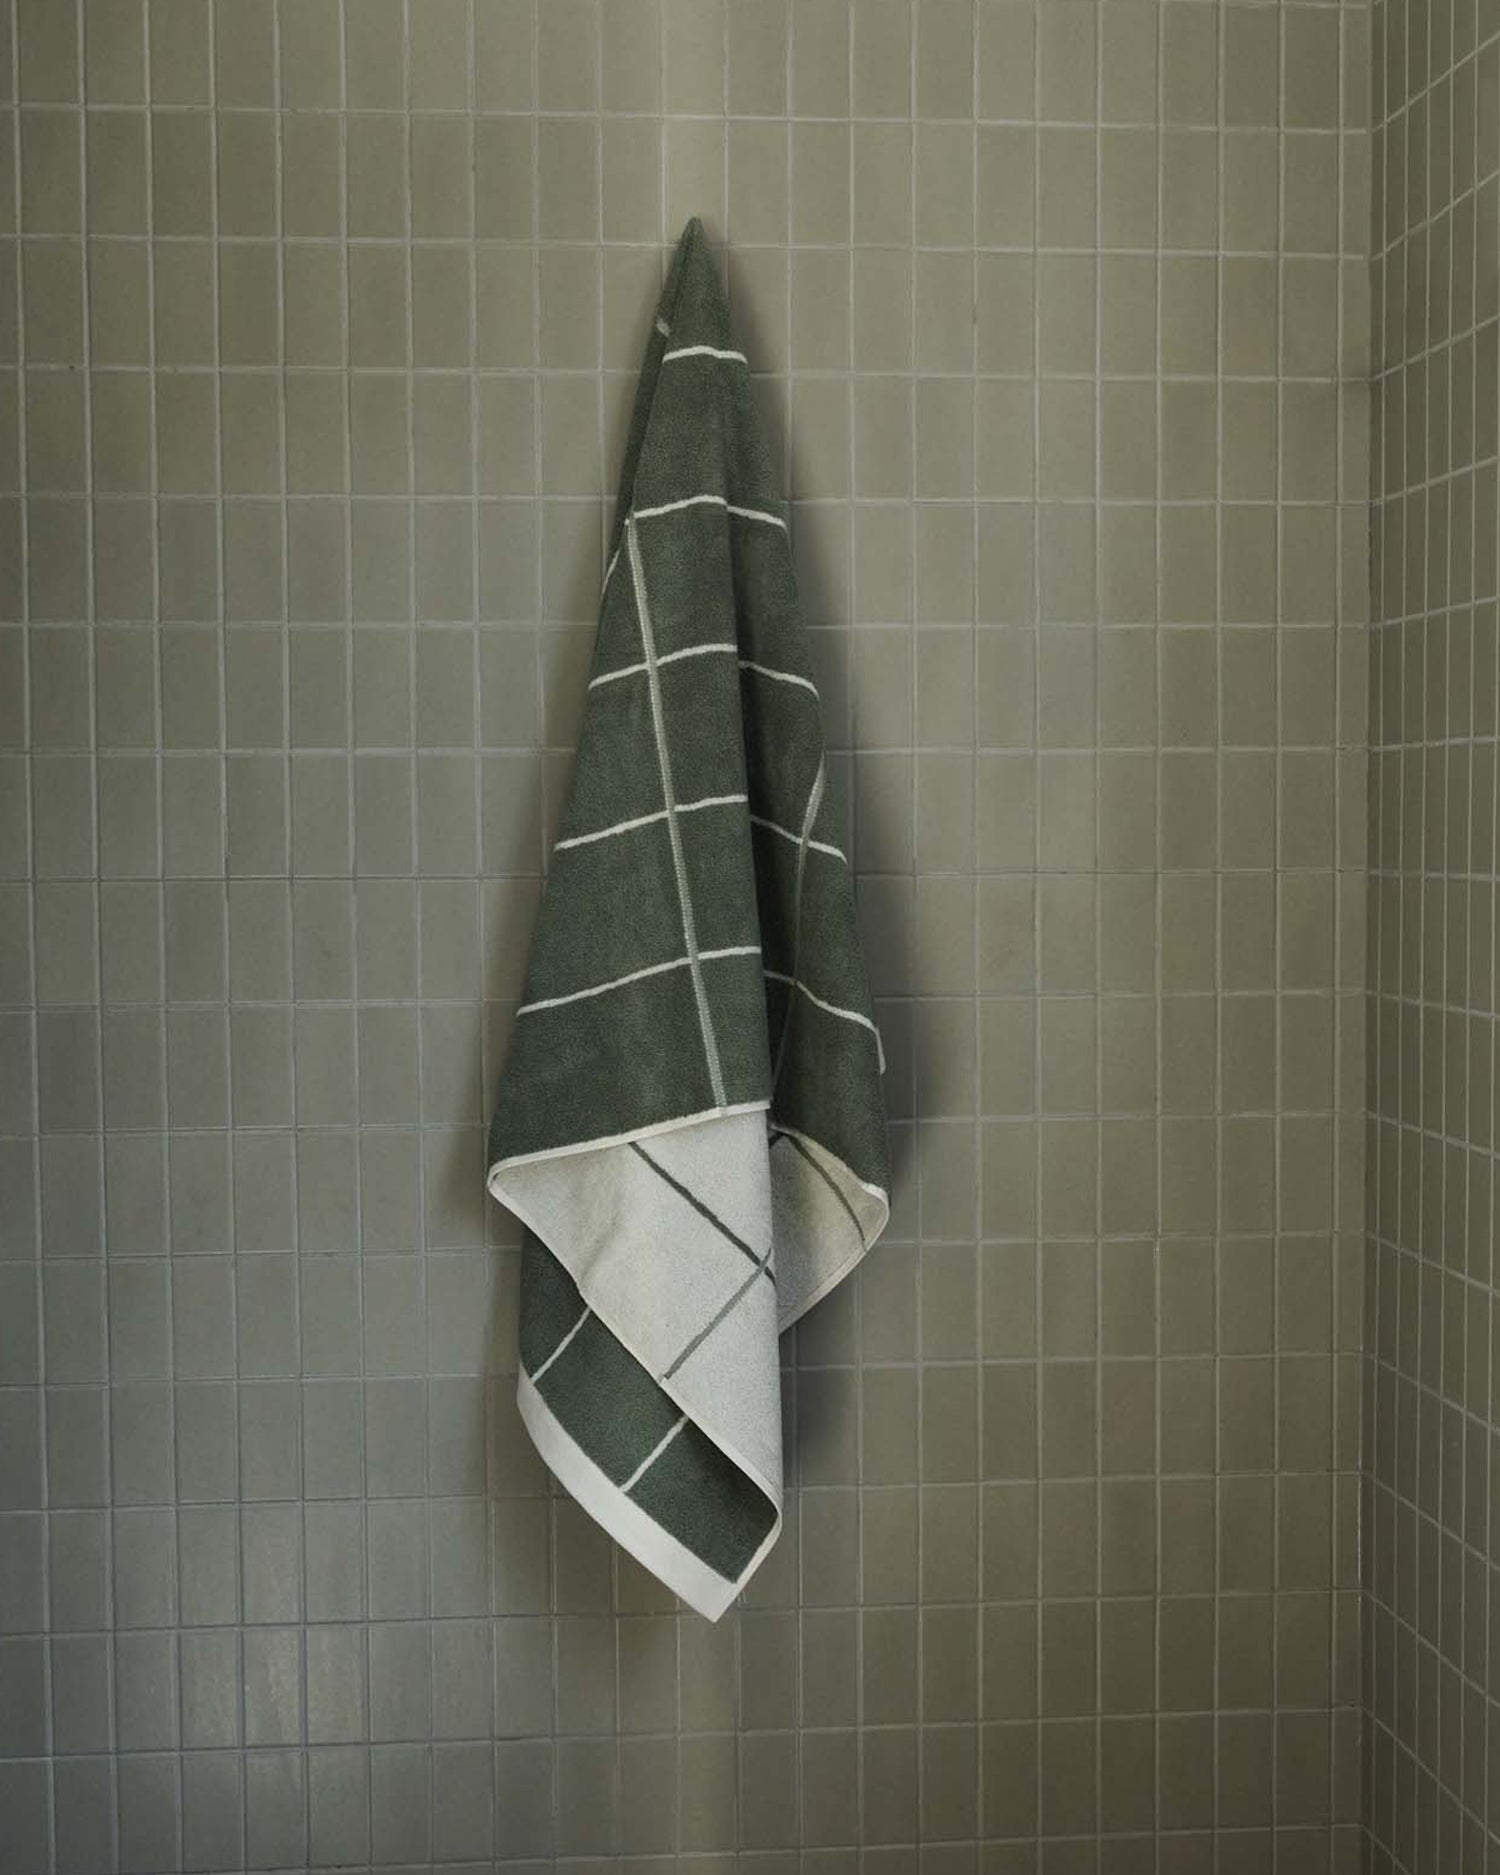 Miles Bath Towel - Sage & Chalk